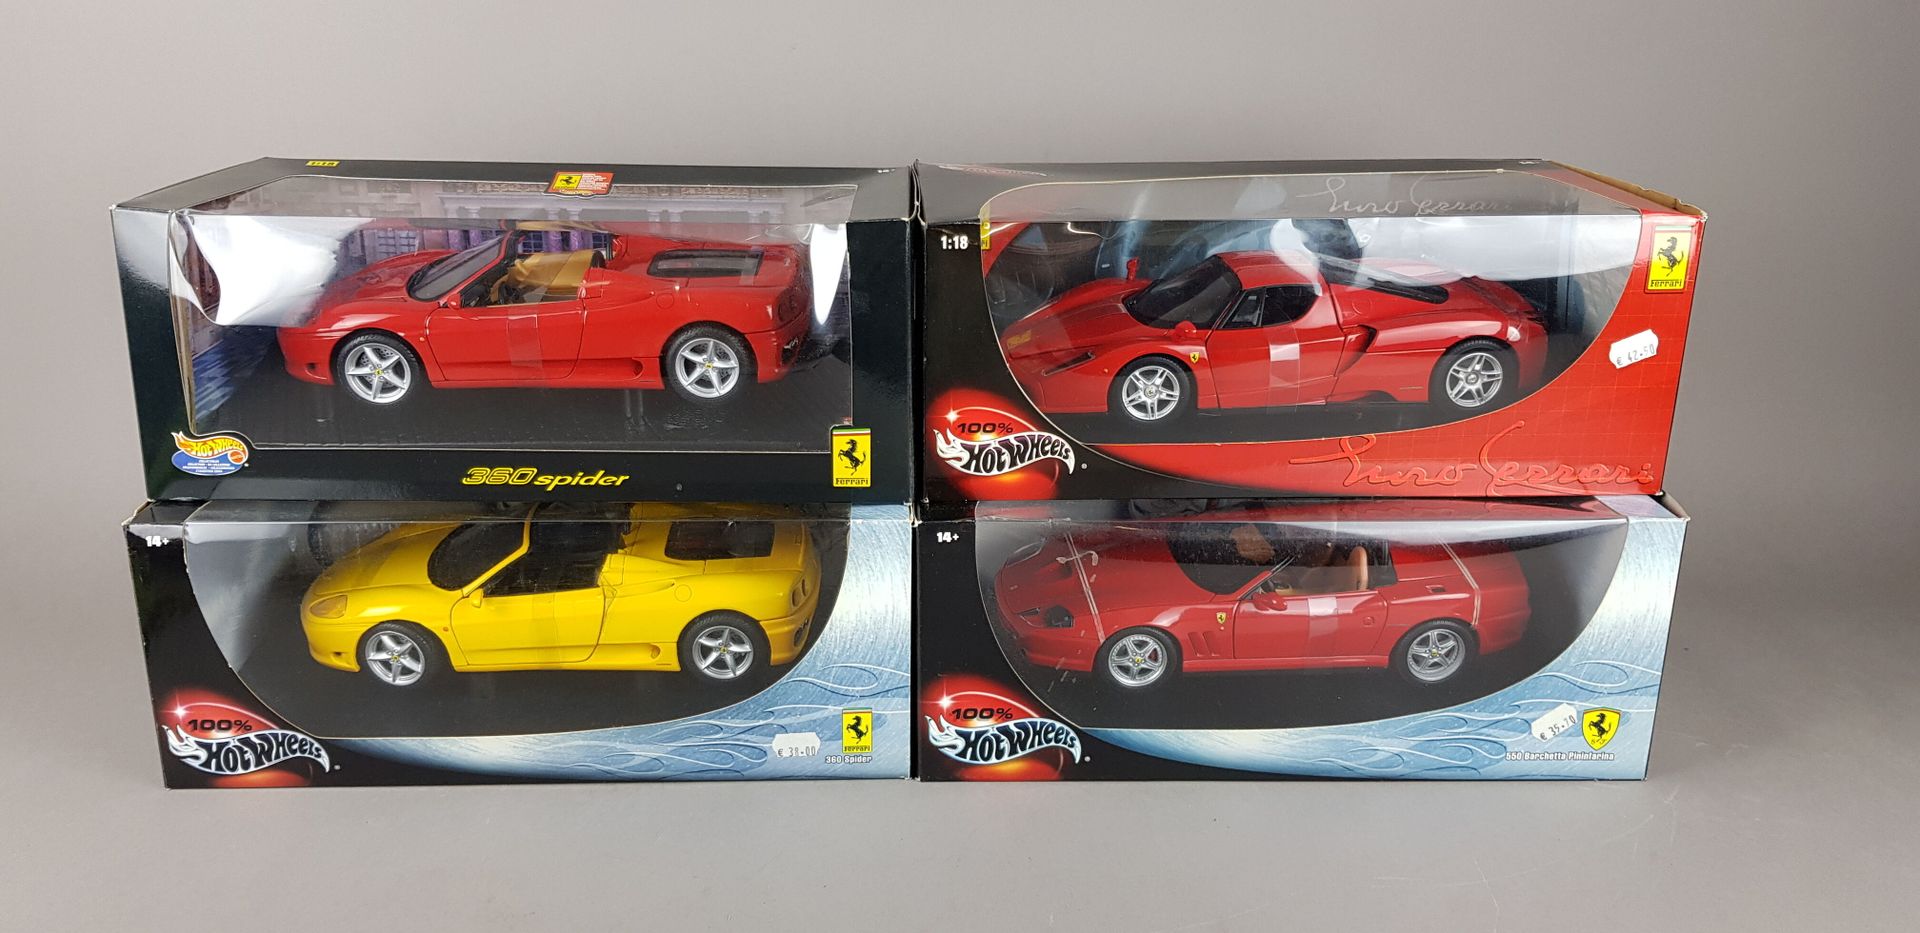 Null HOT WHEELS - QUATRE Ferrari échelle 1/18 ;

1x Buro

2x 360 Spider

1x 550 &hellip;